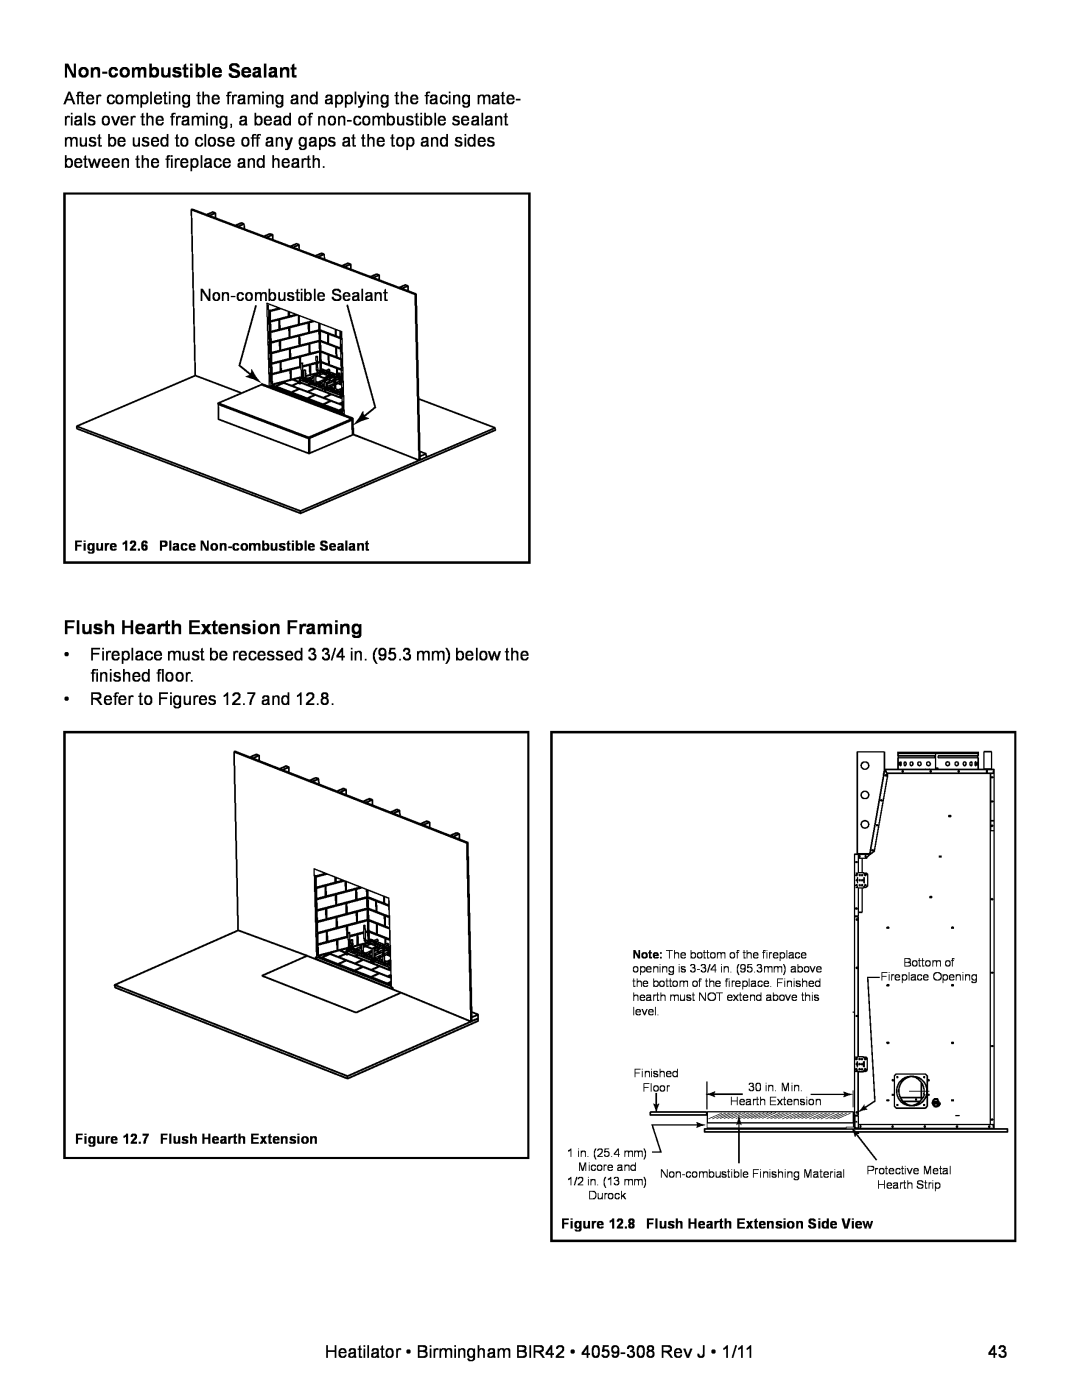 Heatiator BIR42 owner manual Non-combustibleSealant, Flush Hearth Extension Framing 